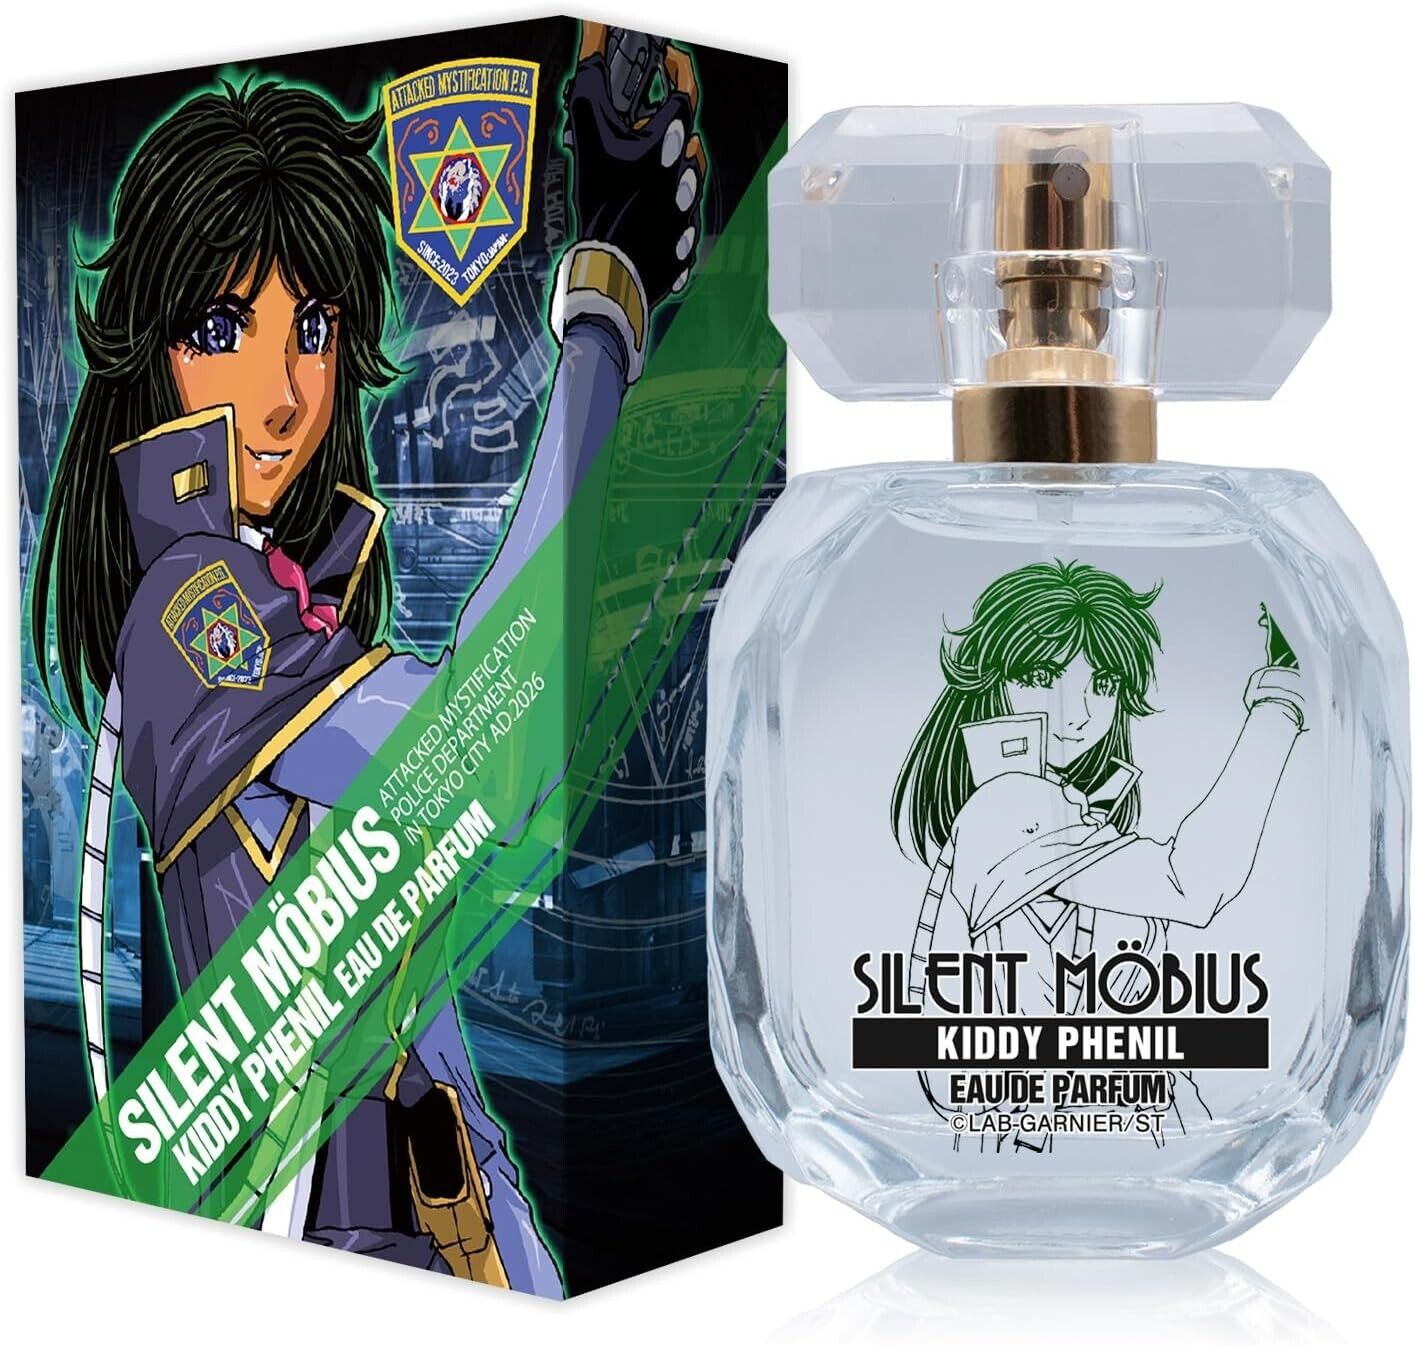 Silent Mobius Kiddy Phenil Fragrance Perfume 60ml Limited